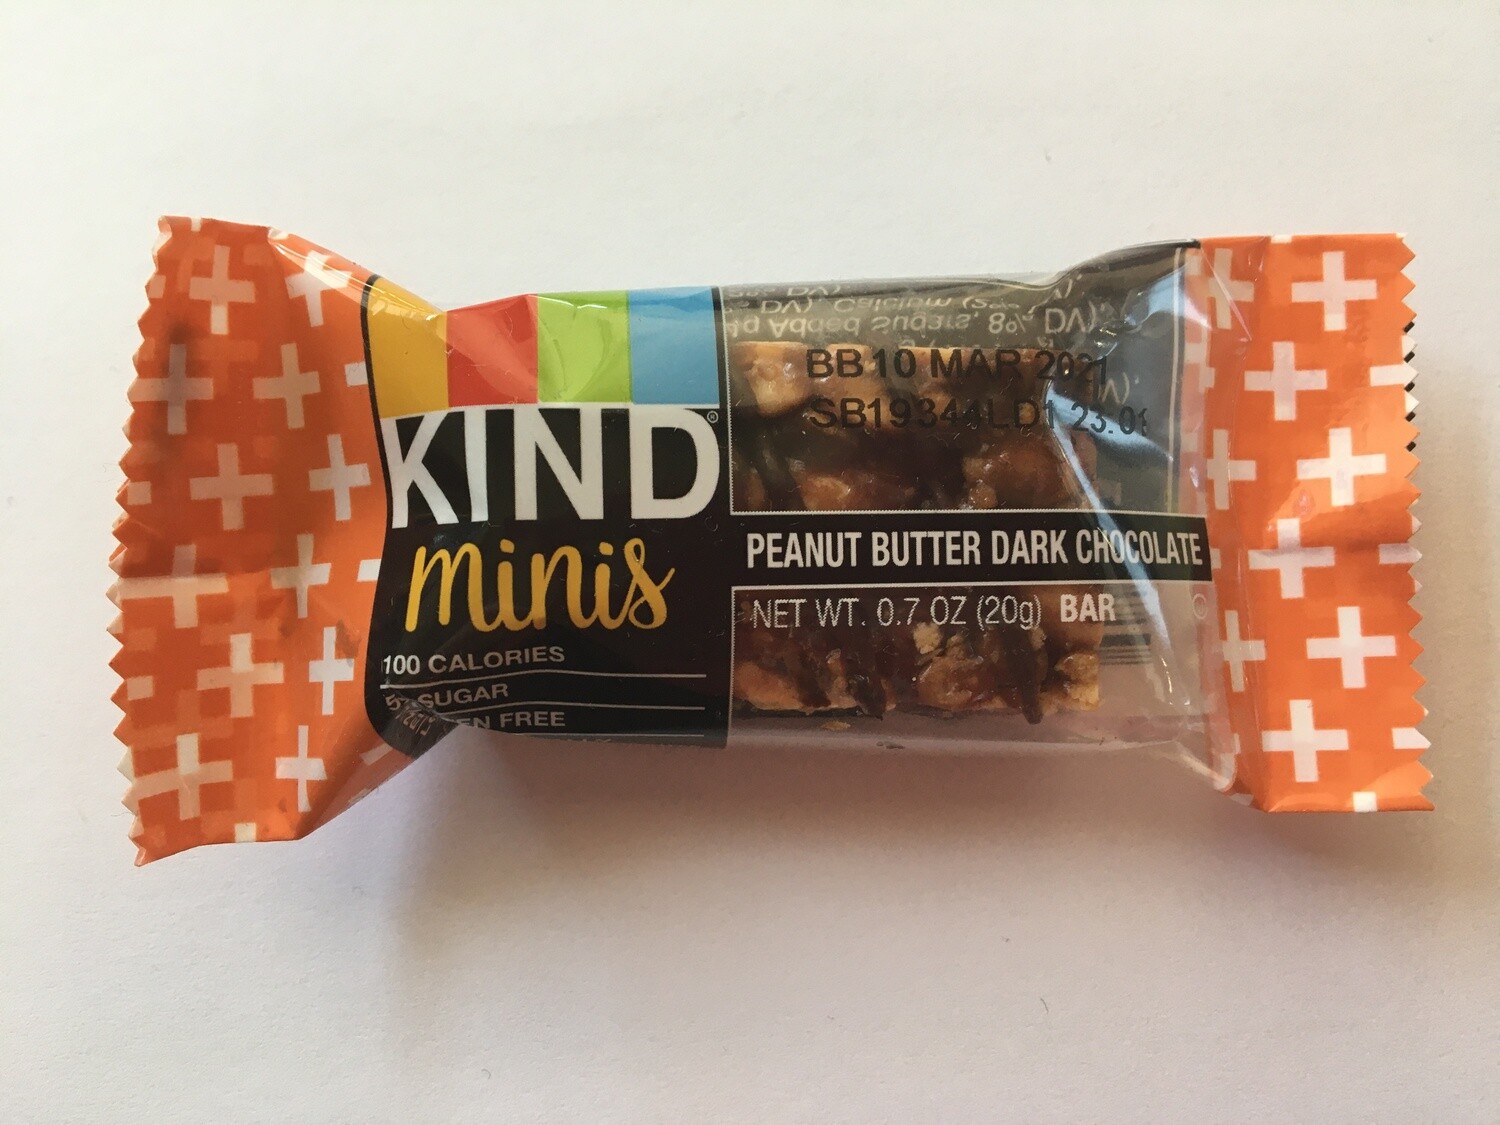 Snack / Bar / Kind Minis Peanut Butter Dark Chocolate Single